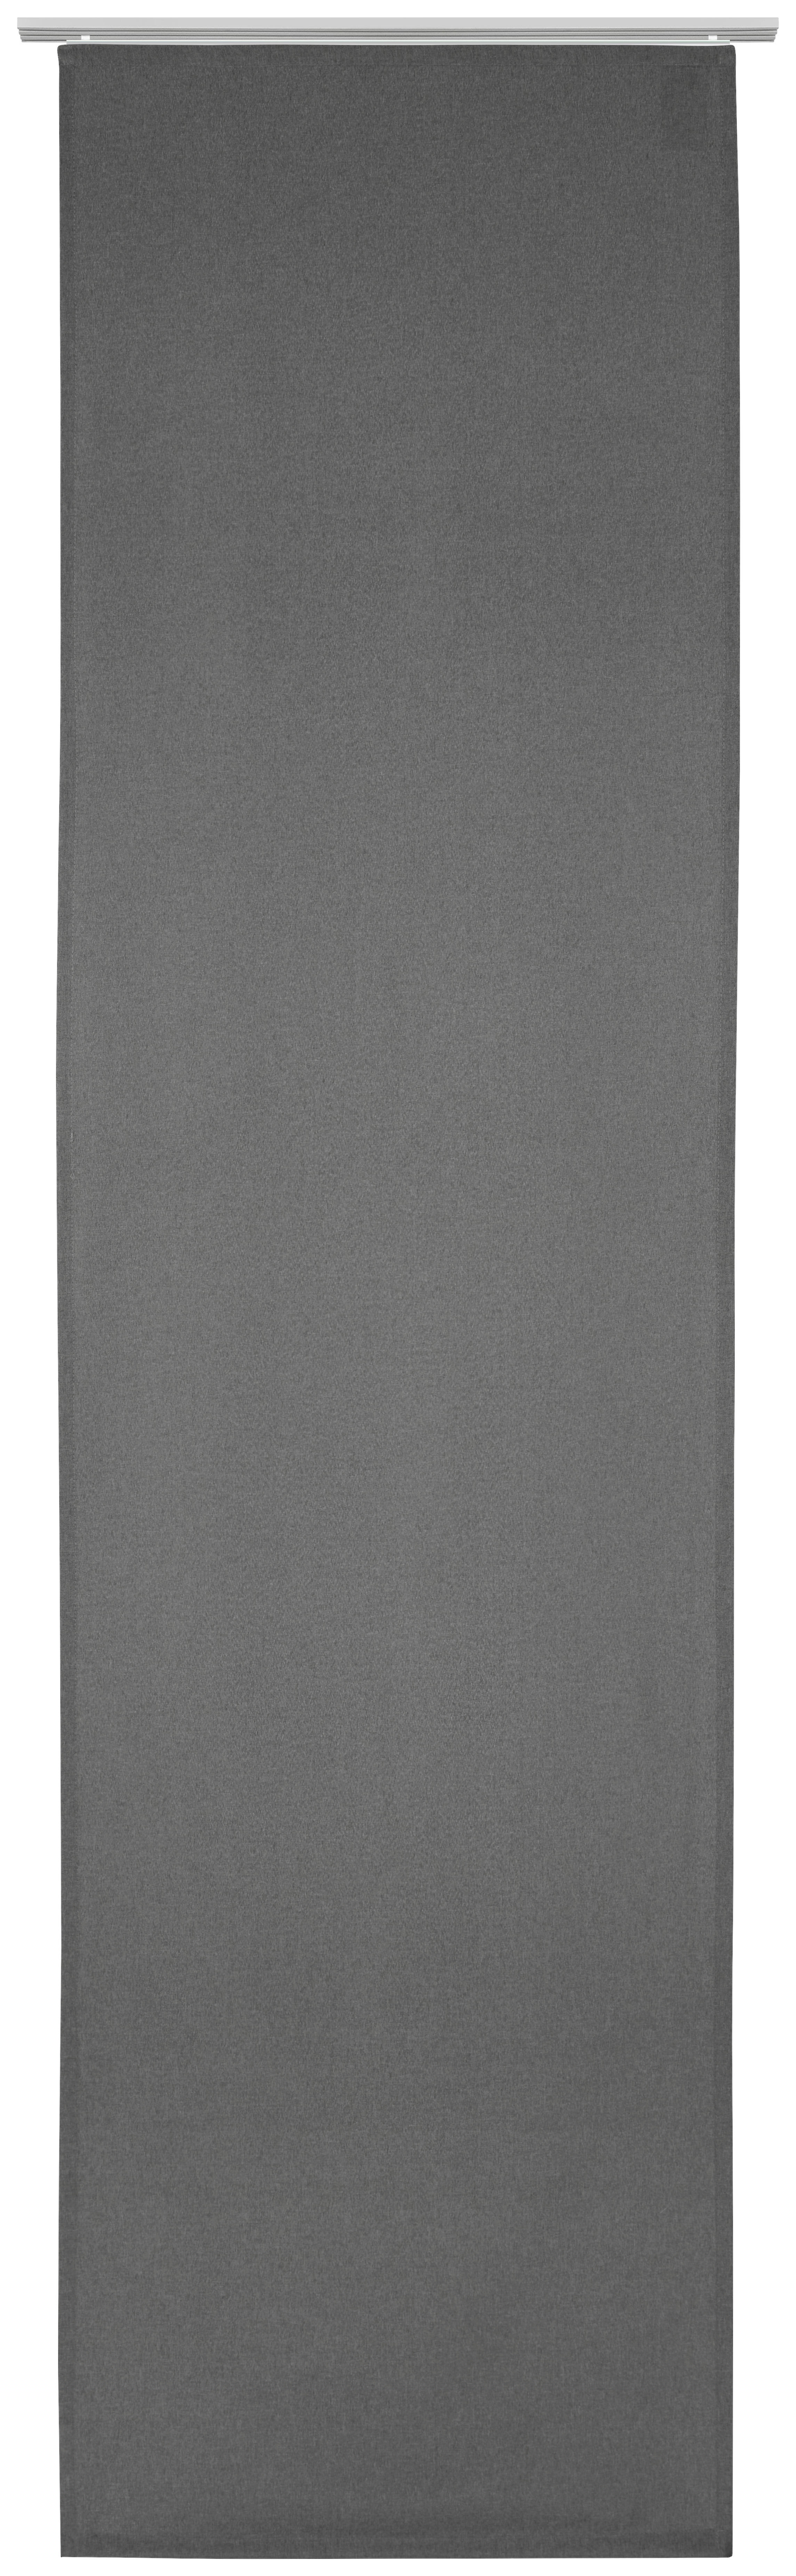 FLÄCHENVORHANG in Dunkelgrau blickdicht  - Dunkelgrau, Design, Textil (60/255cm) - Novel